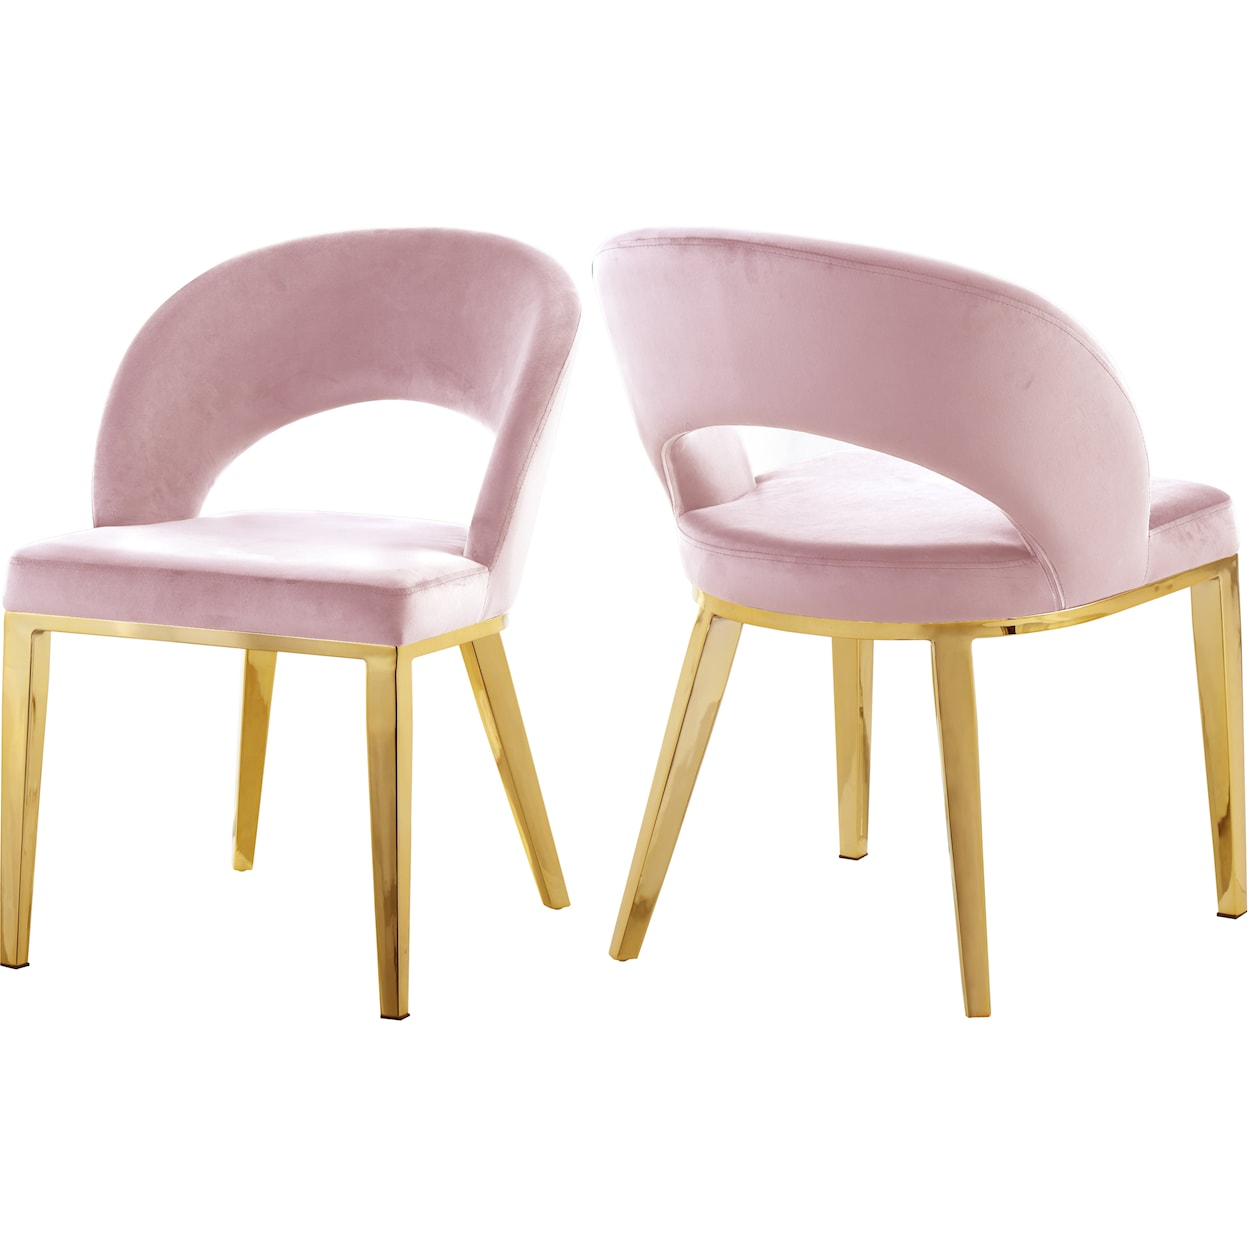 Meridian Furniture Roberto Dining Chair